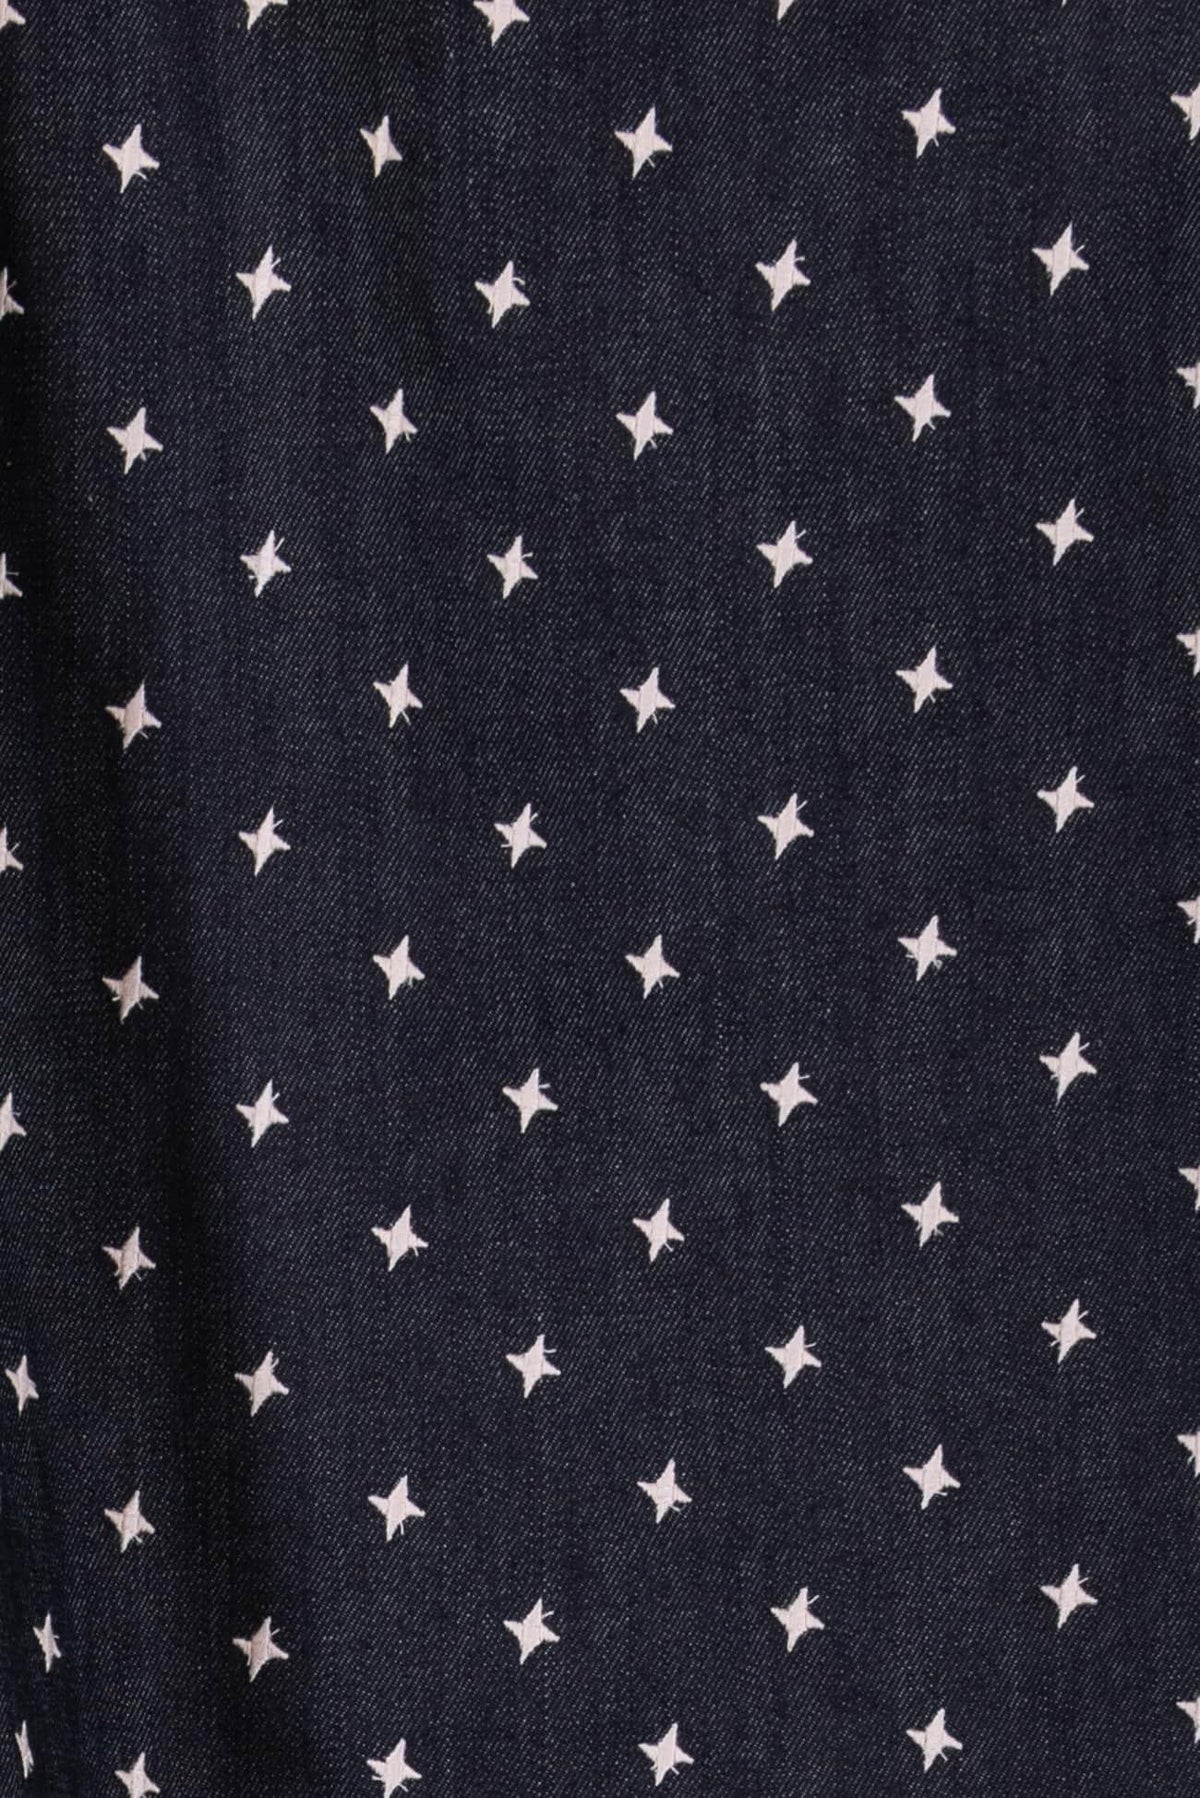 Compass Star Embroidered Denim Woven - Marcy Tilton Fabrics